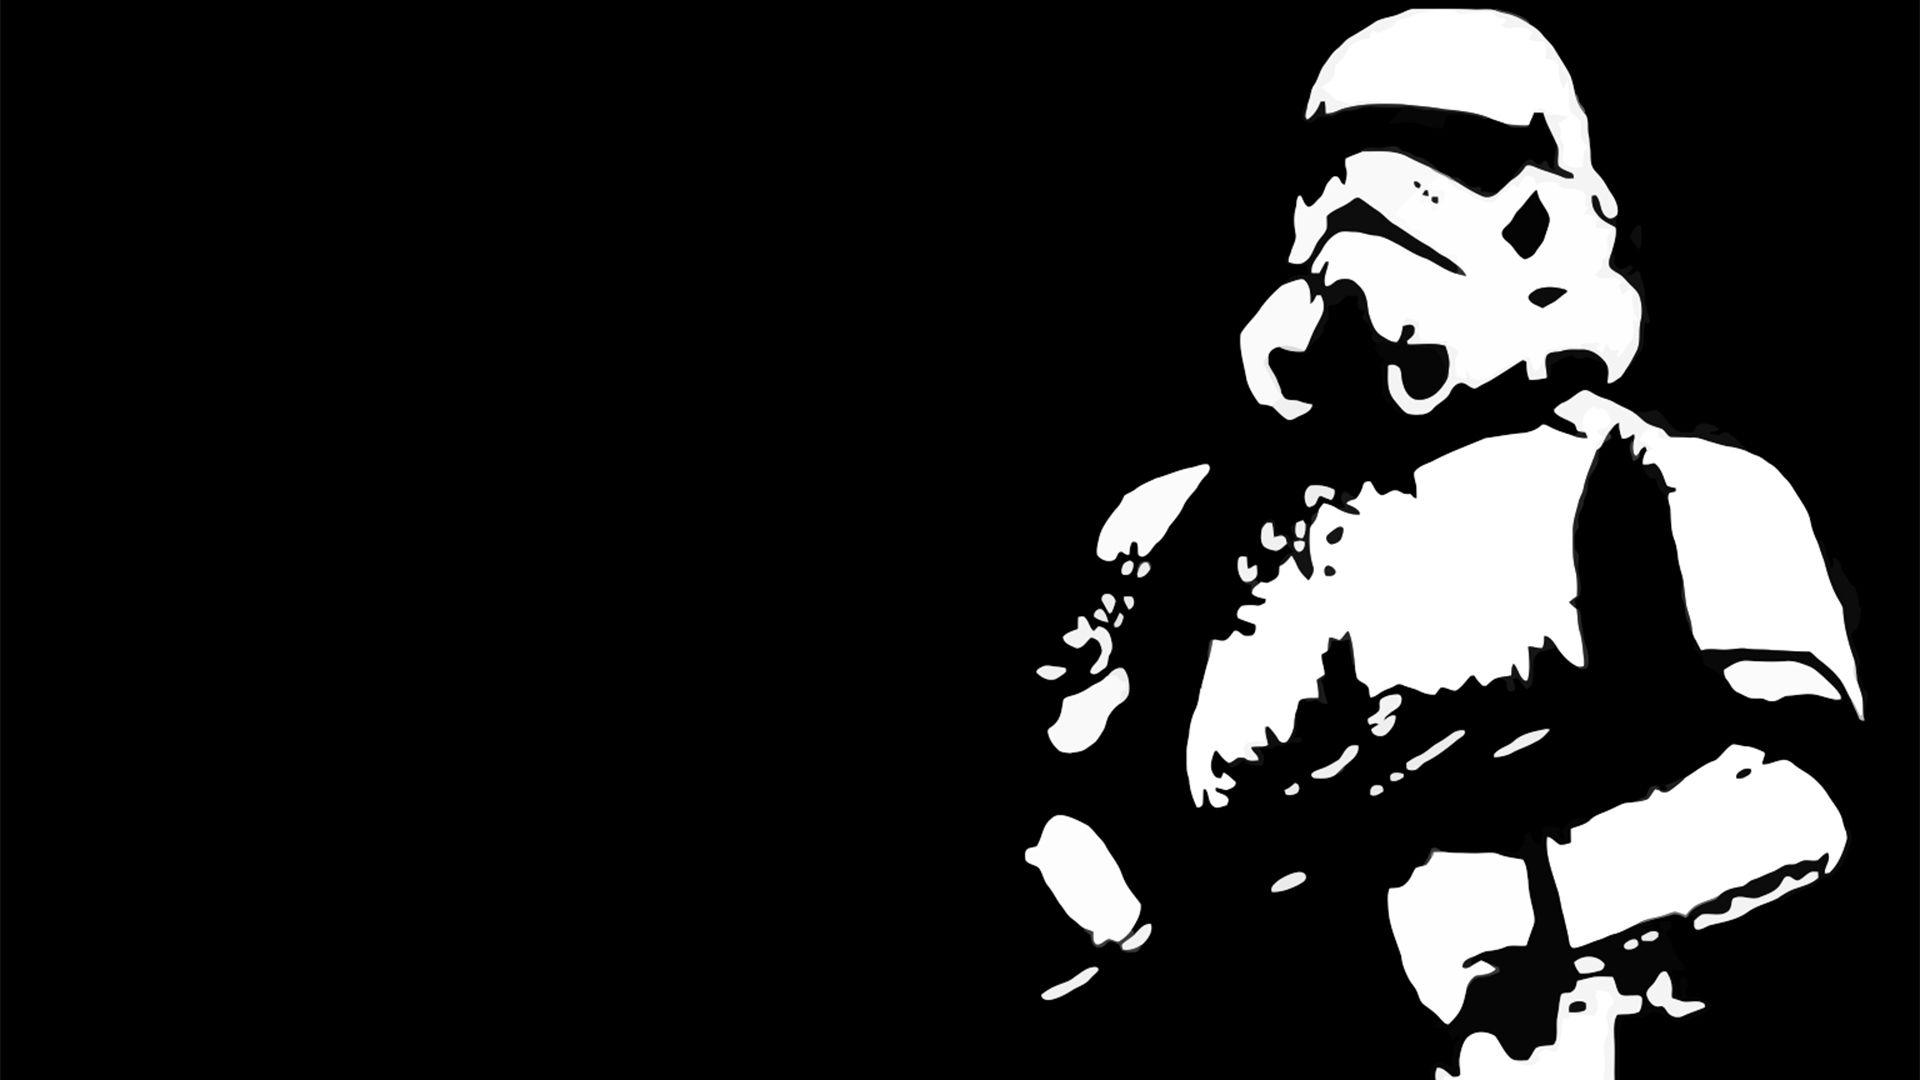 Wallpaper Star Wars Stormtroopers Moonwalk Back Background taken